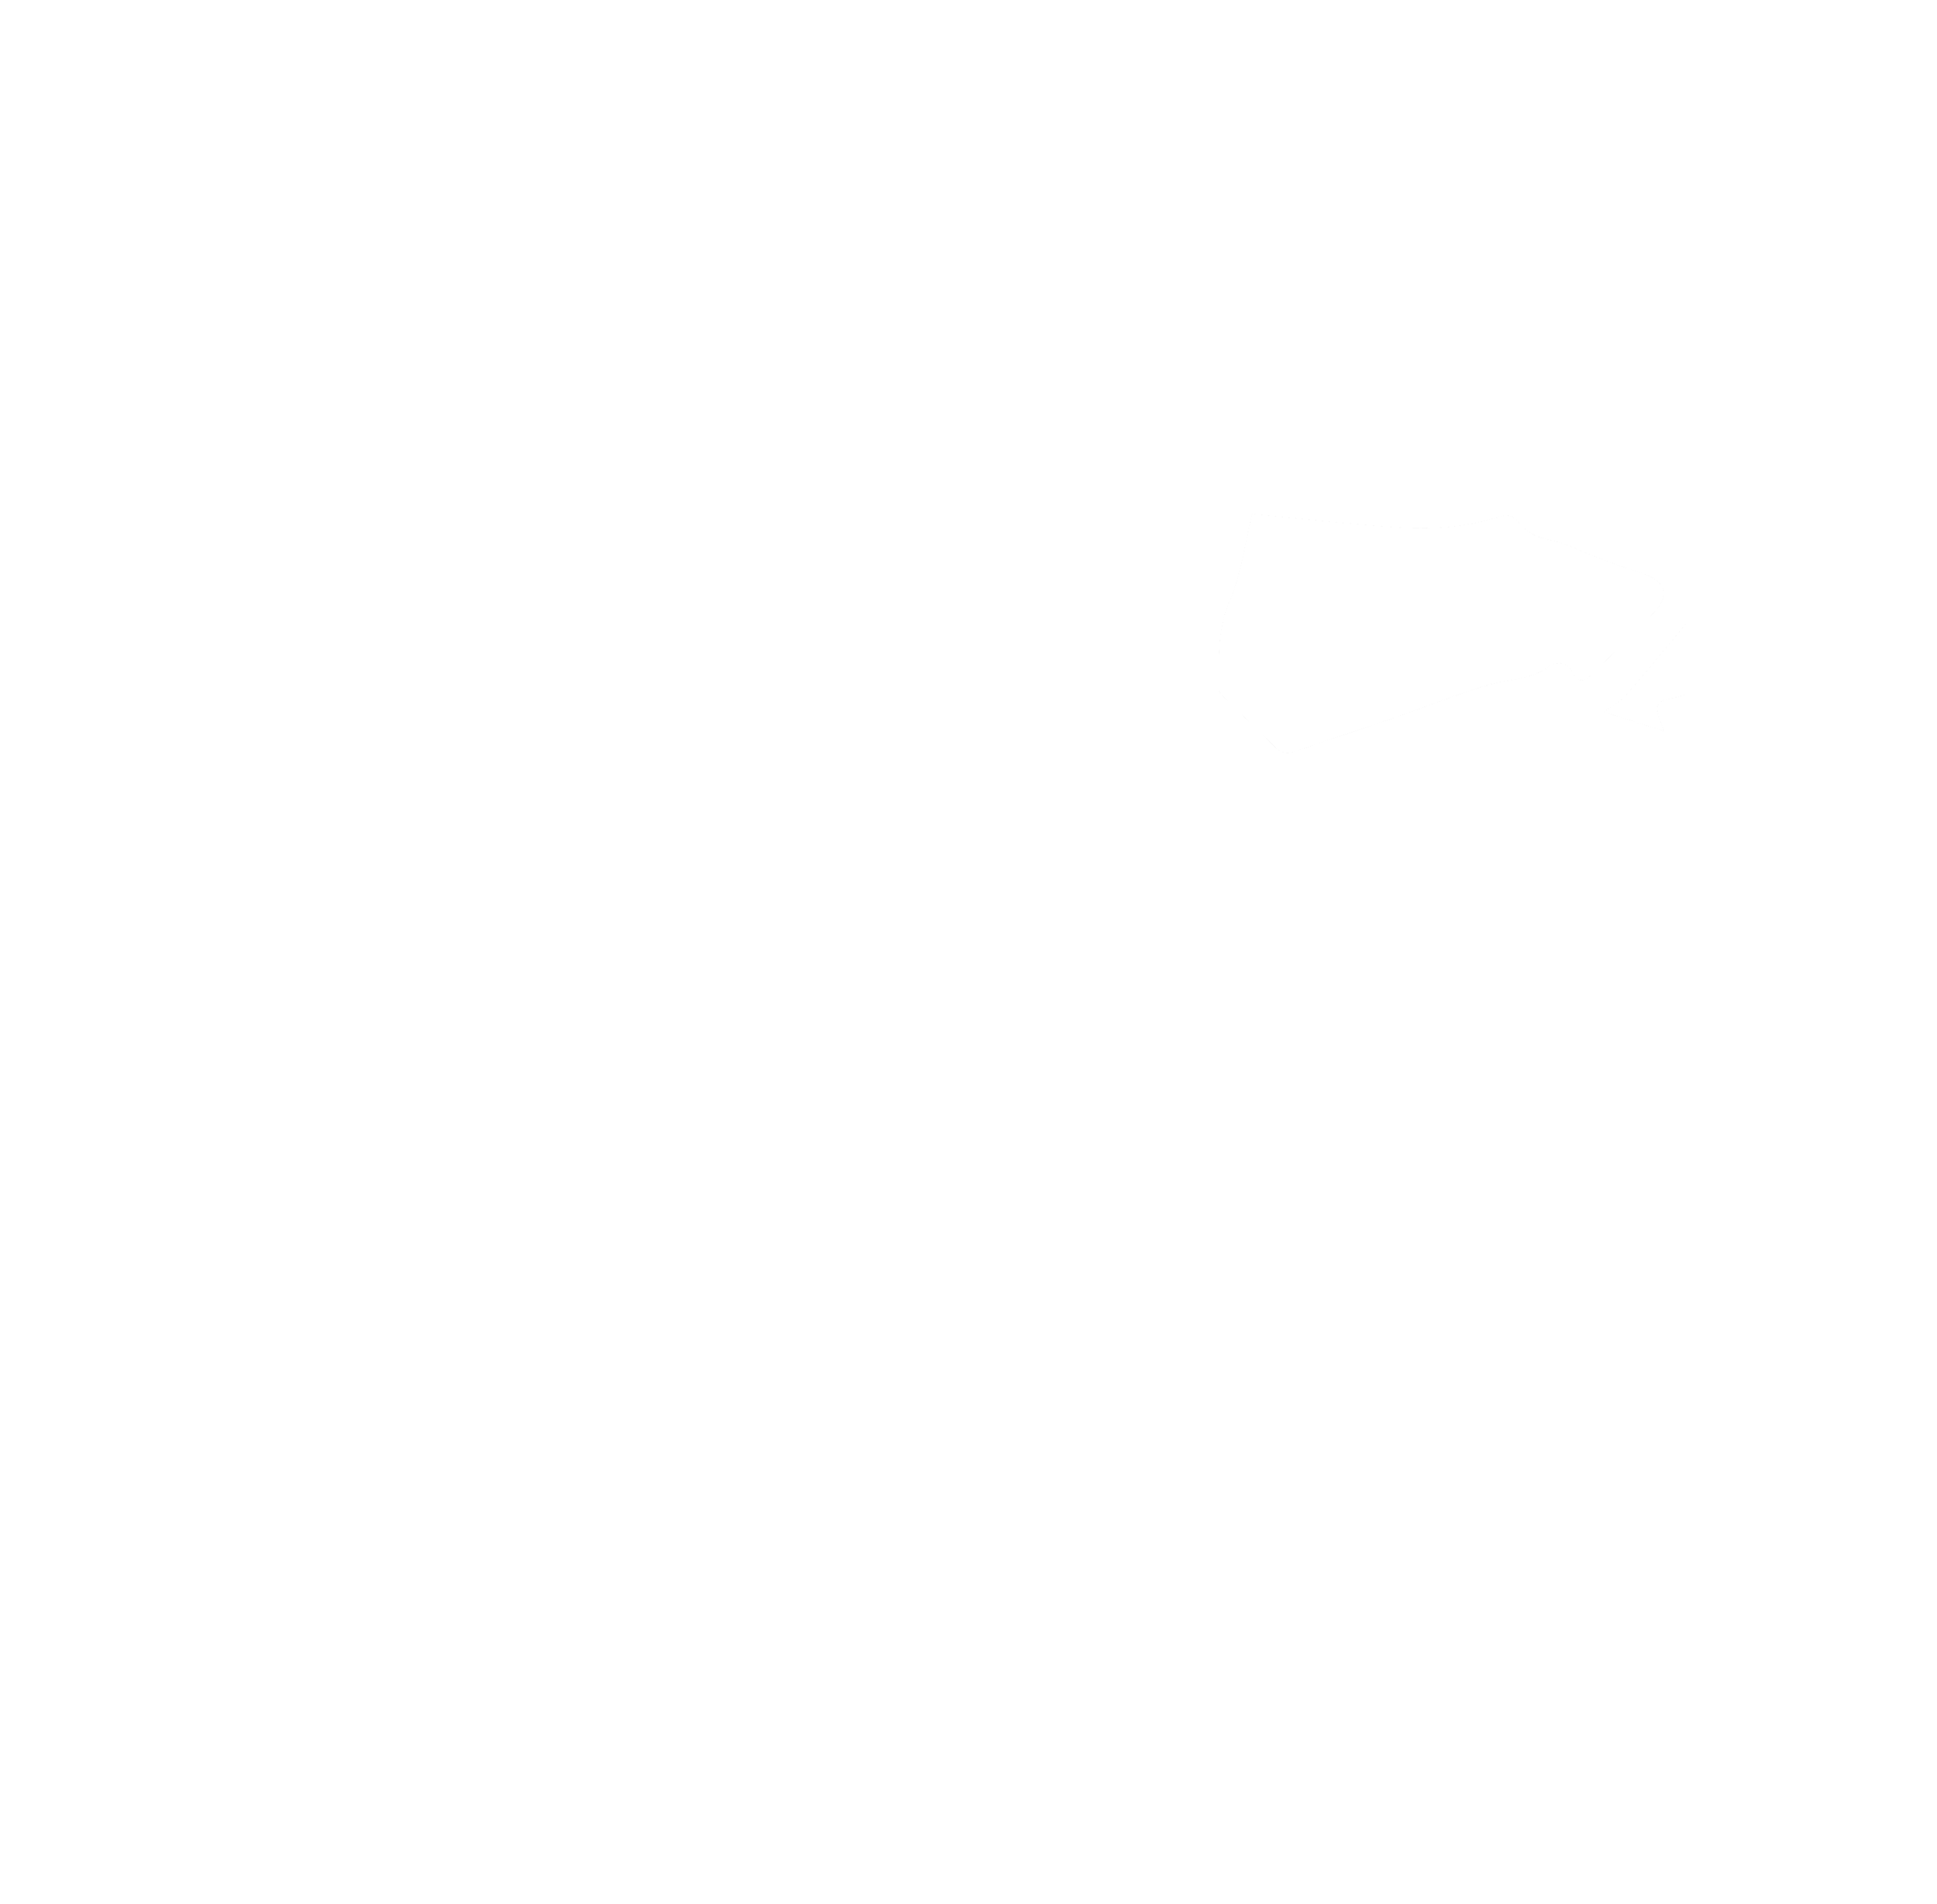 Ultra Marathon Caballo Blanco